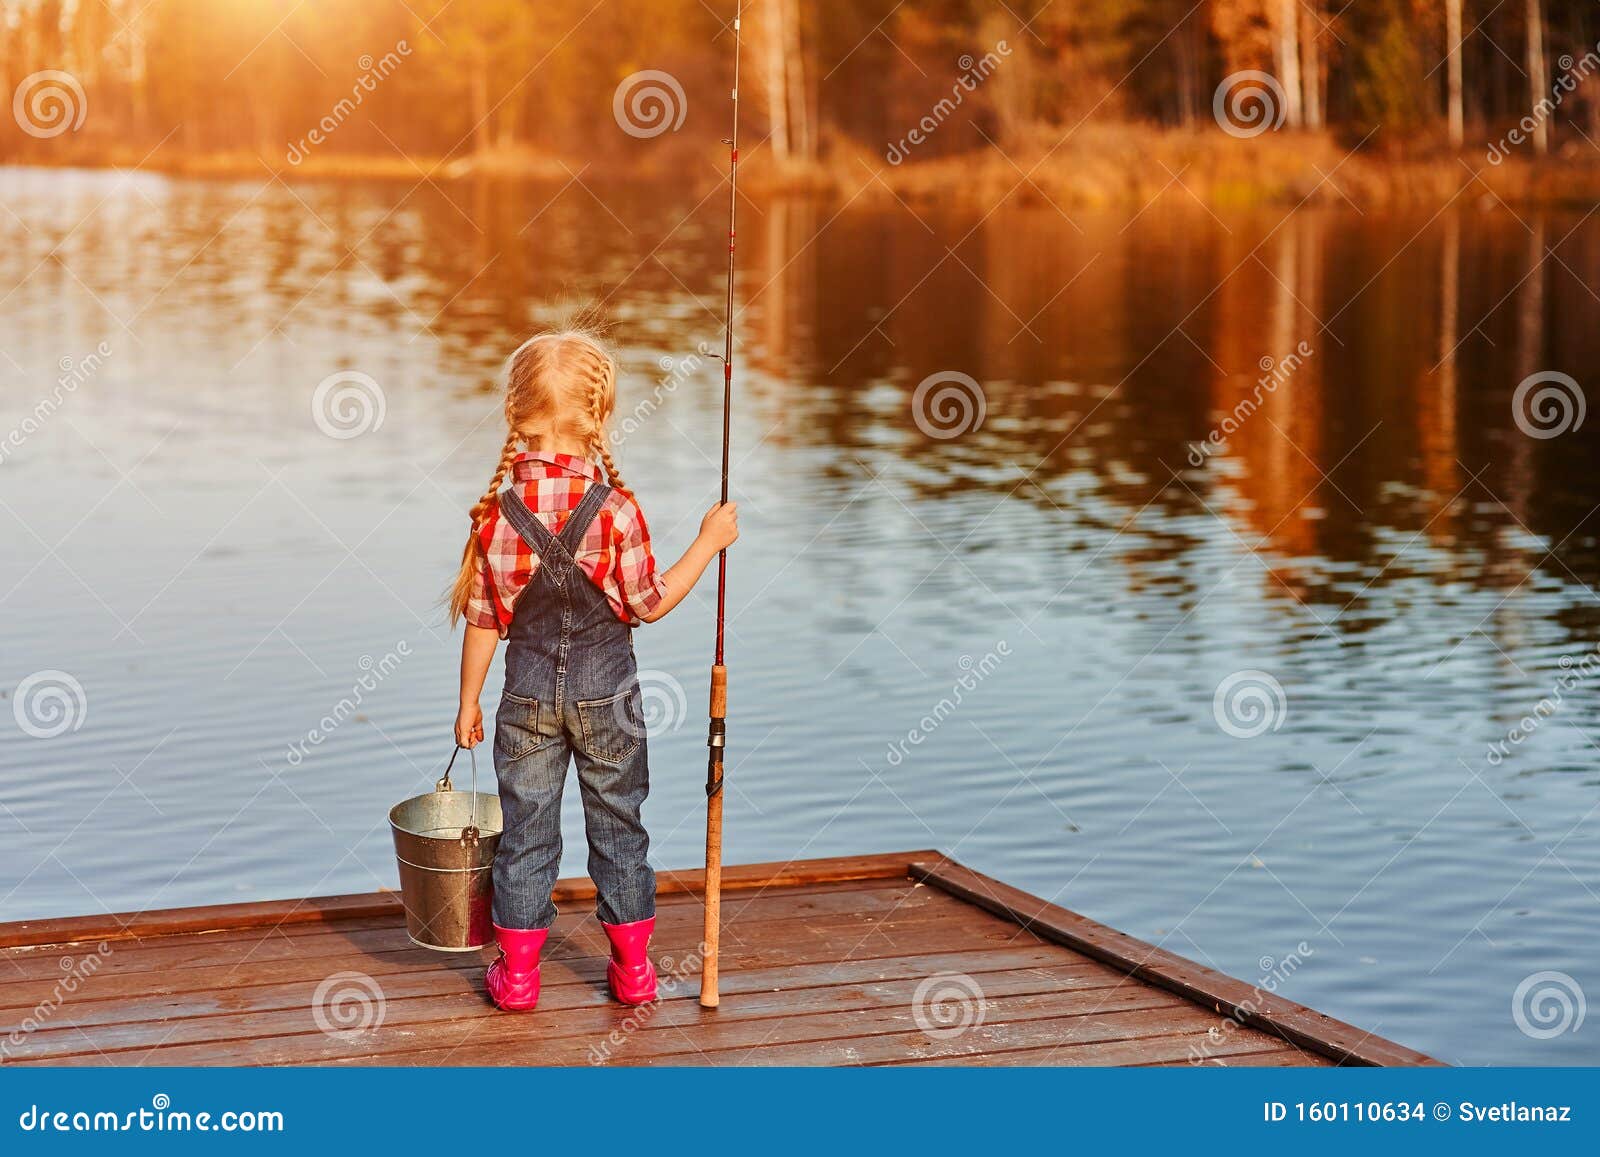 https://thumbs.dreamstime.com/z/little-girl-fishing-rod-bucket-came-looks-pond-back-view-160110634.jpg